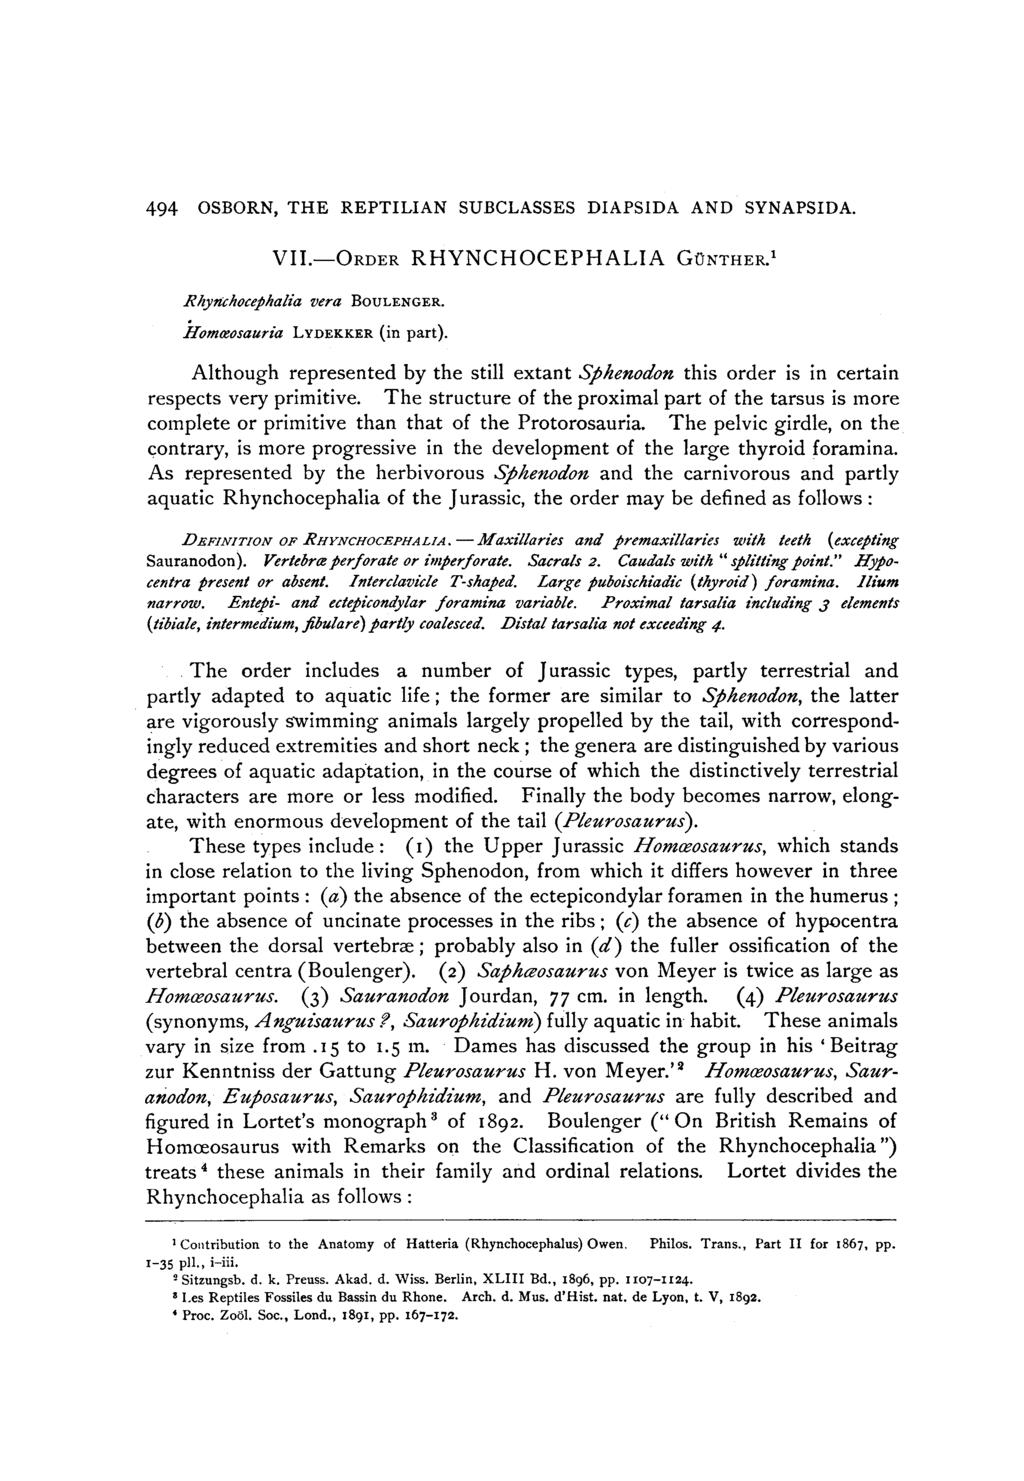 494 OSBORN, THE REPTILIAN SUBCLASSES DIAPSIDA AND SYNAPSIDA. VII.-ORDER RHYNCHOCEPHALIA GONTHER.' Rhynchocephalia vera BOULENGER. Hommeosauria LYDEKKER (in part).